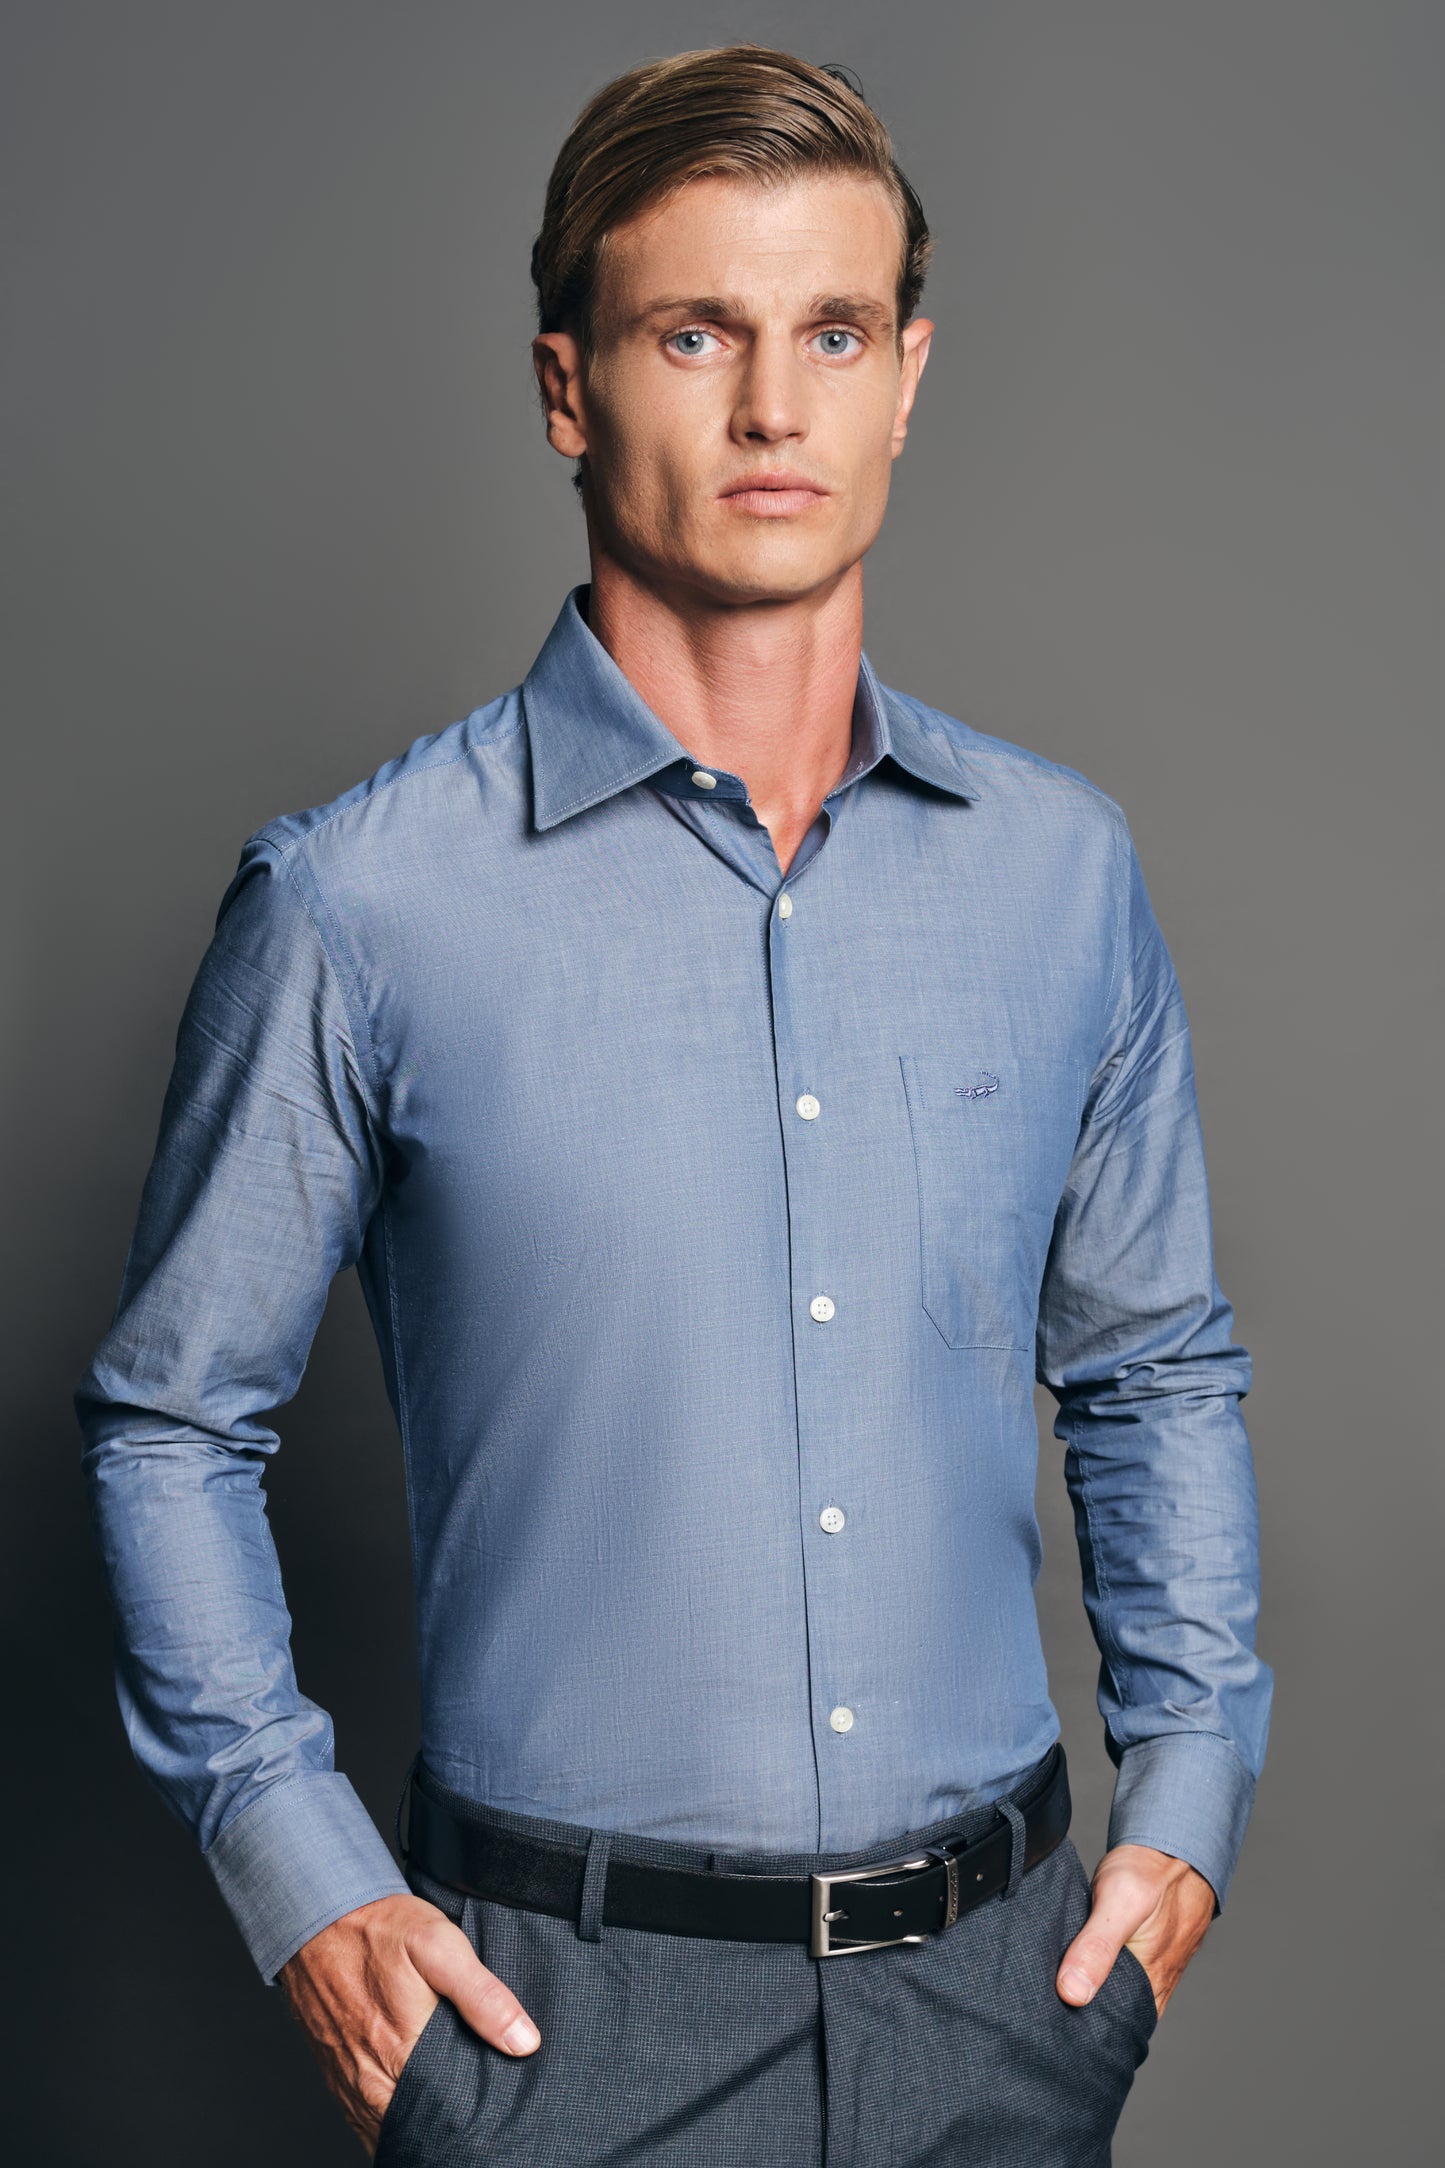 Slim Fit Long sleeves-Formal Shirts-Blue China